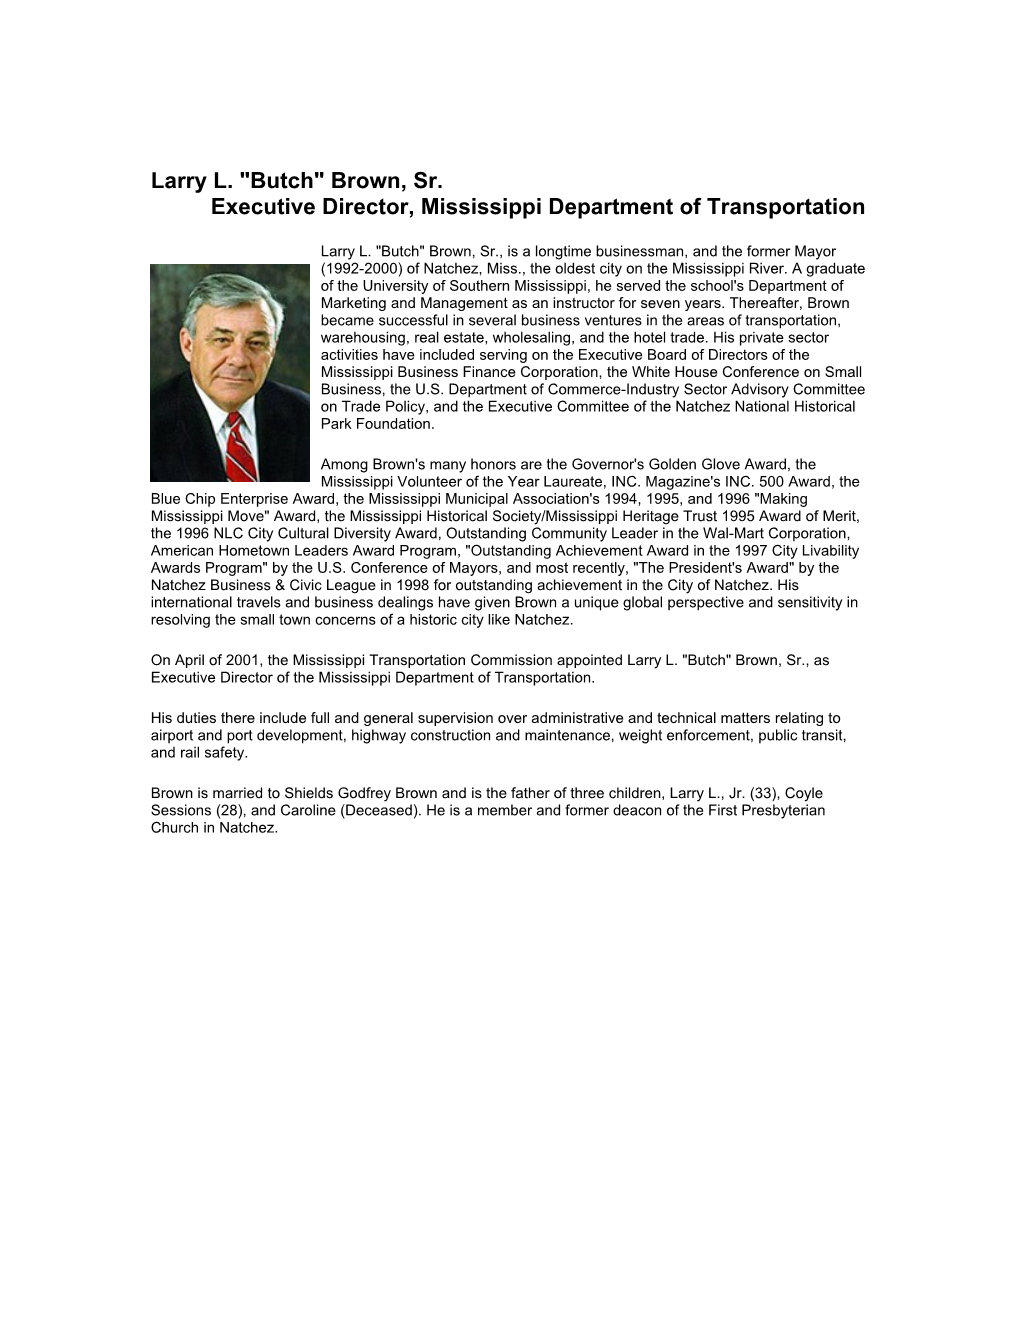 Larry L. Butch Brown, Sr.Executive Director, Mississippi Department of Transportation